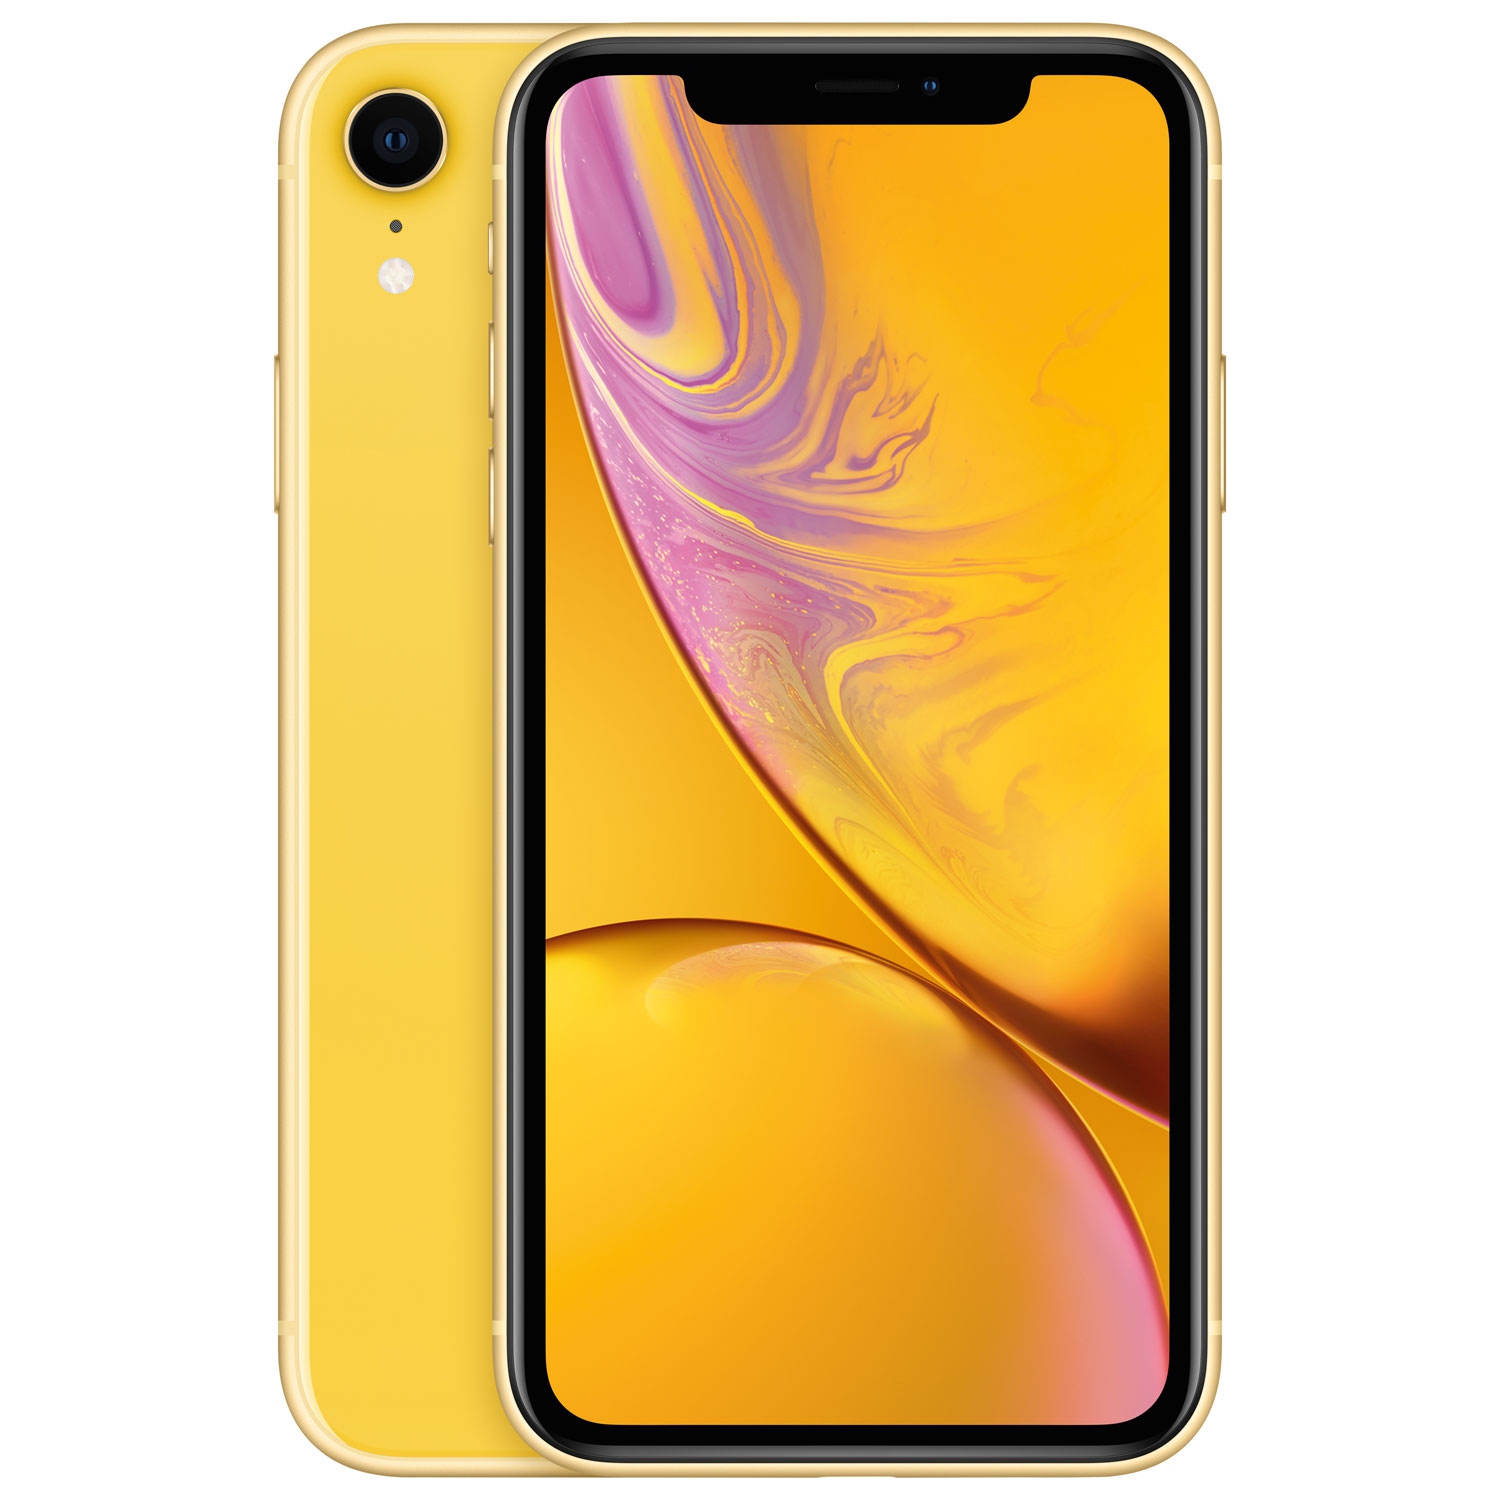 Refurbished (Excellent) - Apple iPhone XR 128GB Smartphone - Yellow - Unlocked - Certified Refurbished